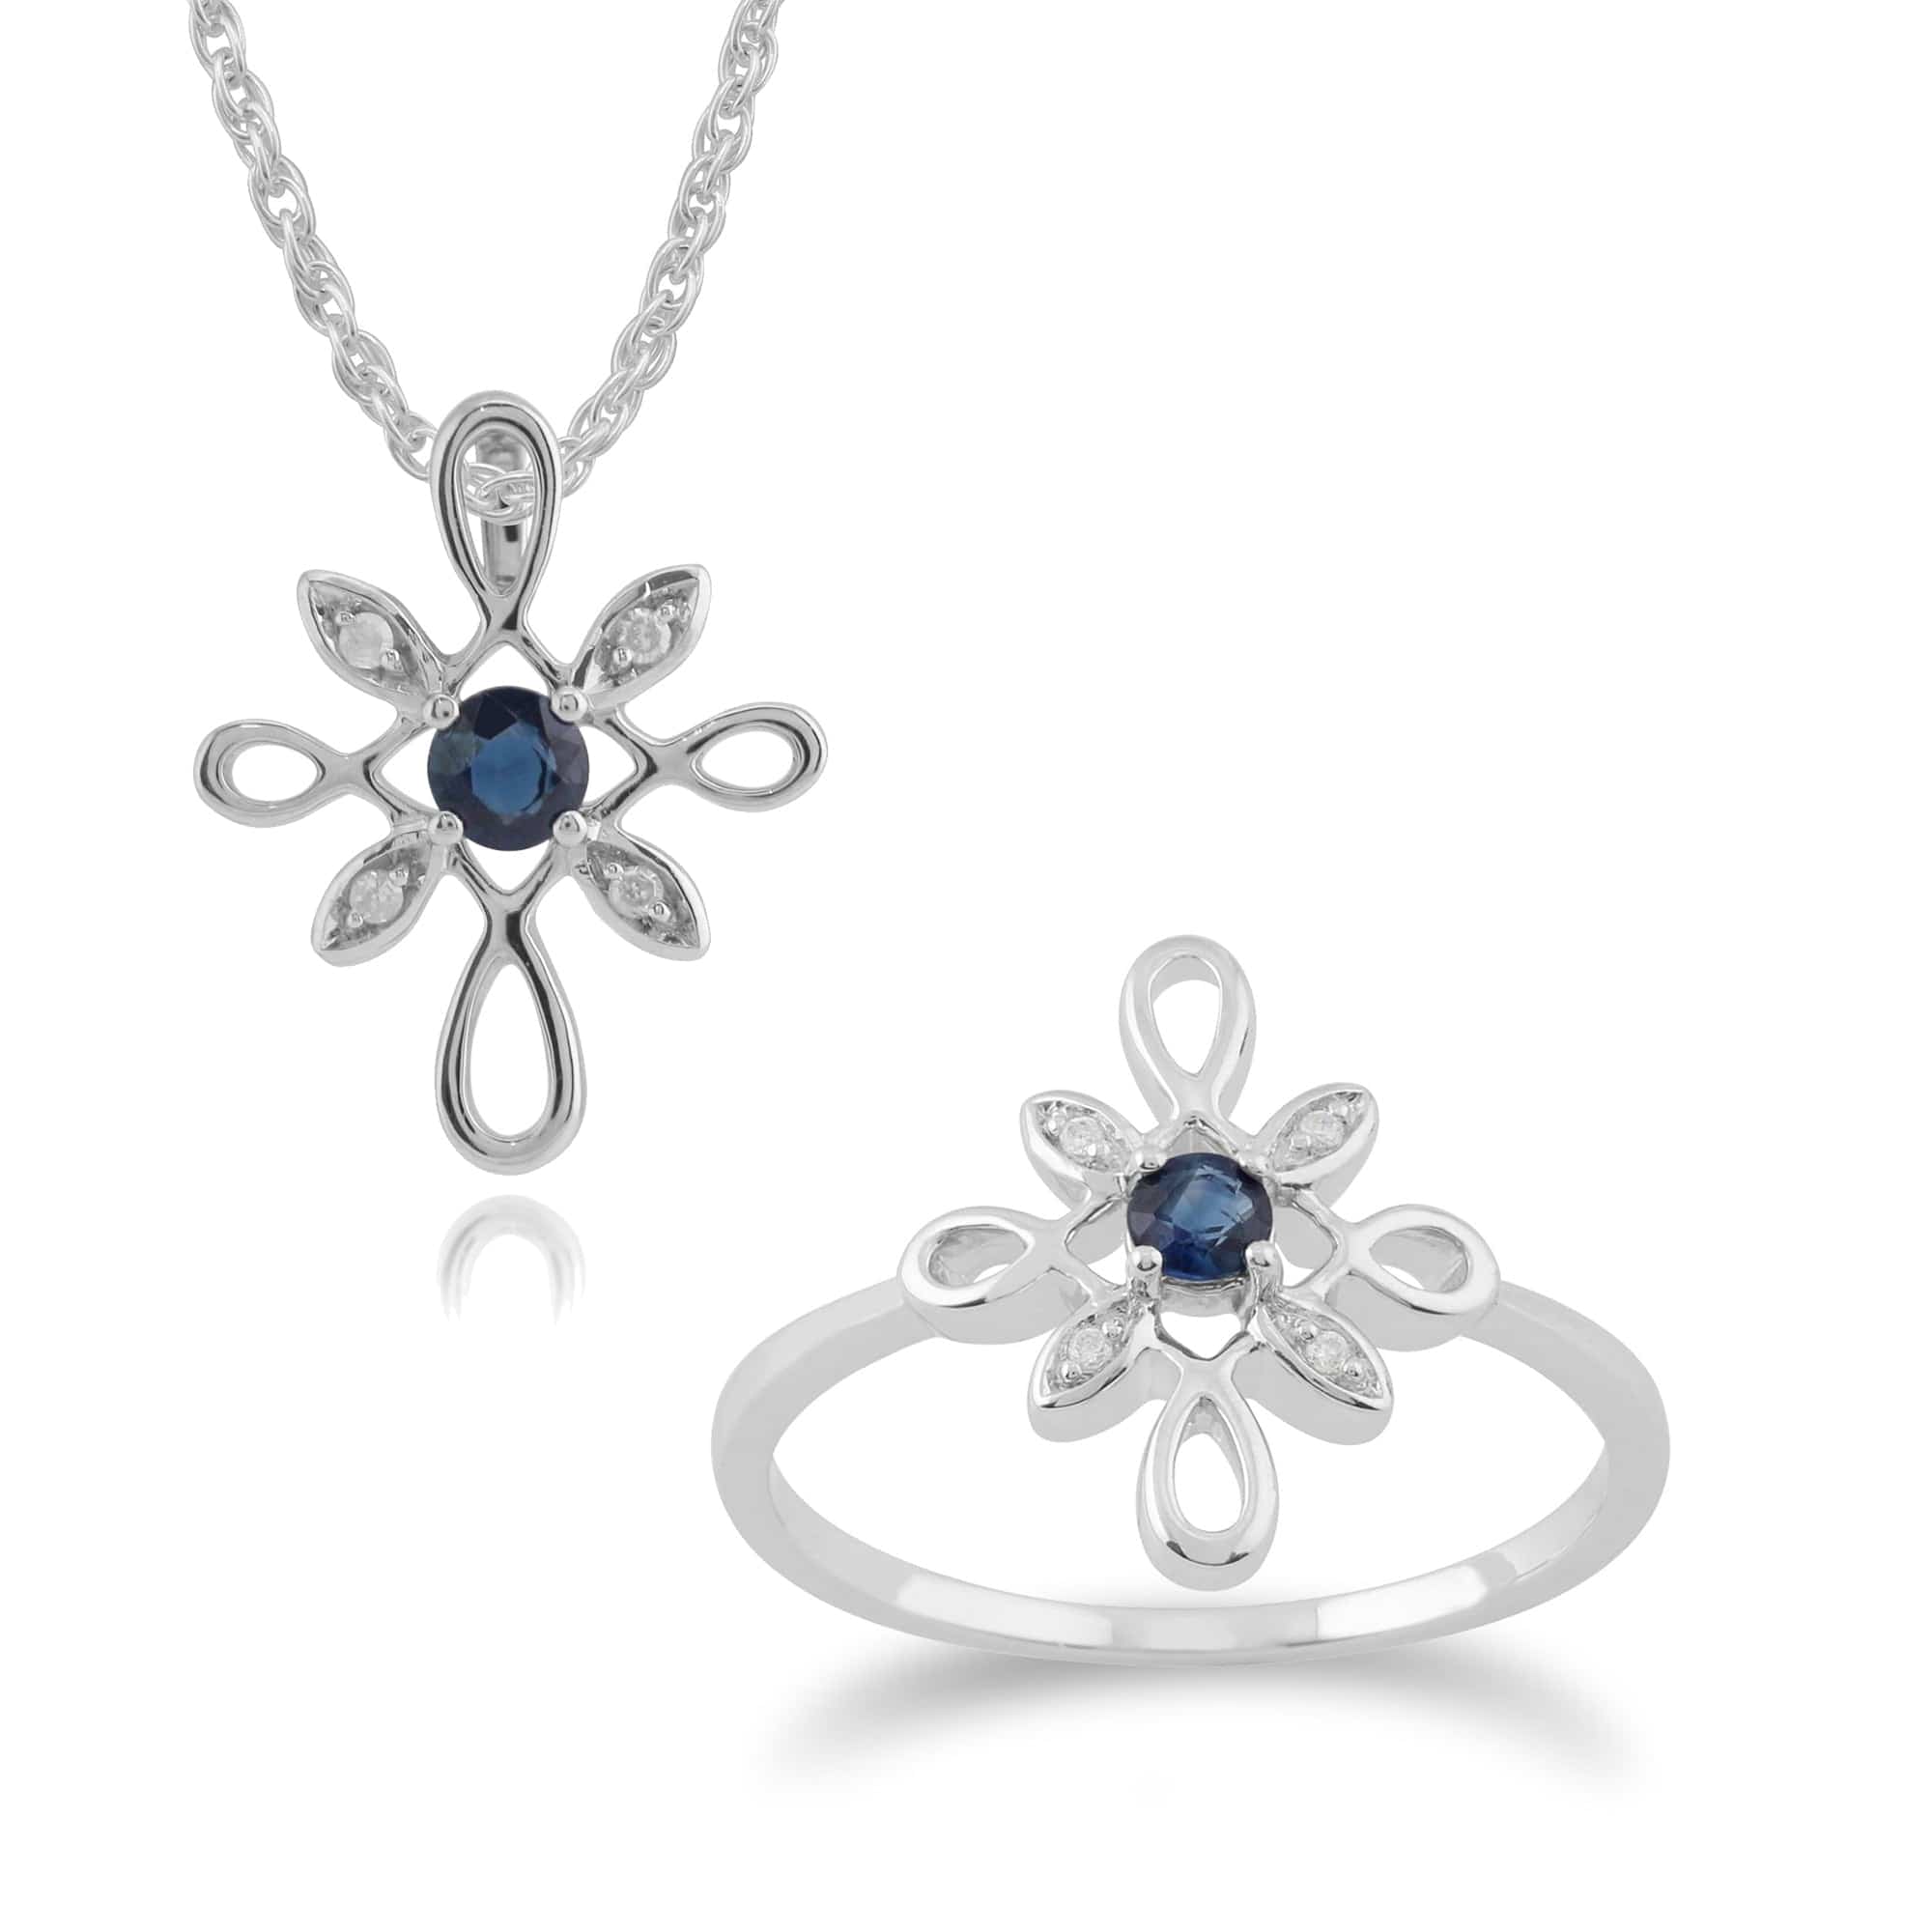 162P0148019-162R0169019 Floral Round Sapphire & Diamond Starburst Pendant & Ring Set in 9ct White Gold 1